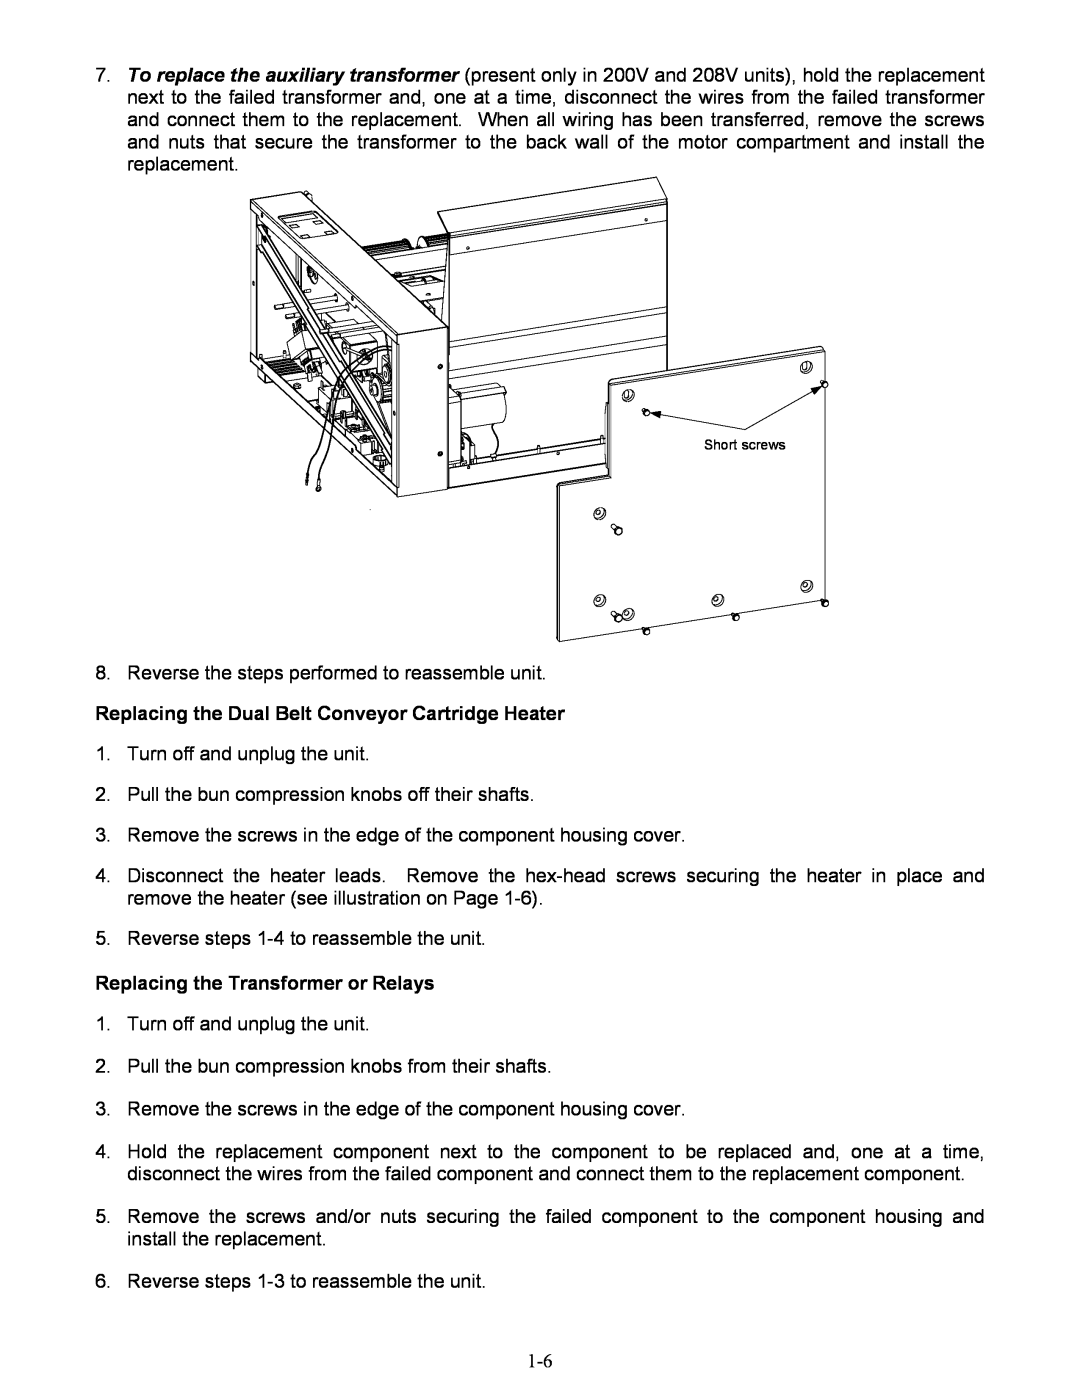 Frymaster CT16 Series Replacing the Dual Belt Conveyor Cartridge Heater, Replacing the Transformer or Relays, Short screws 